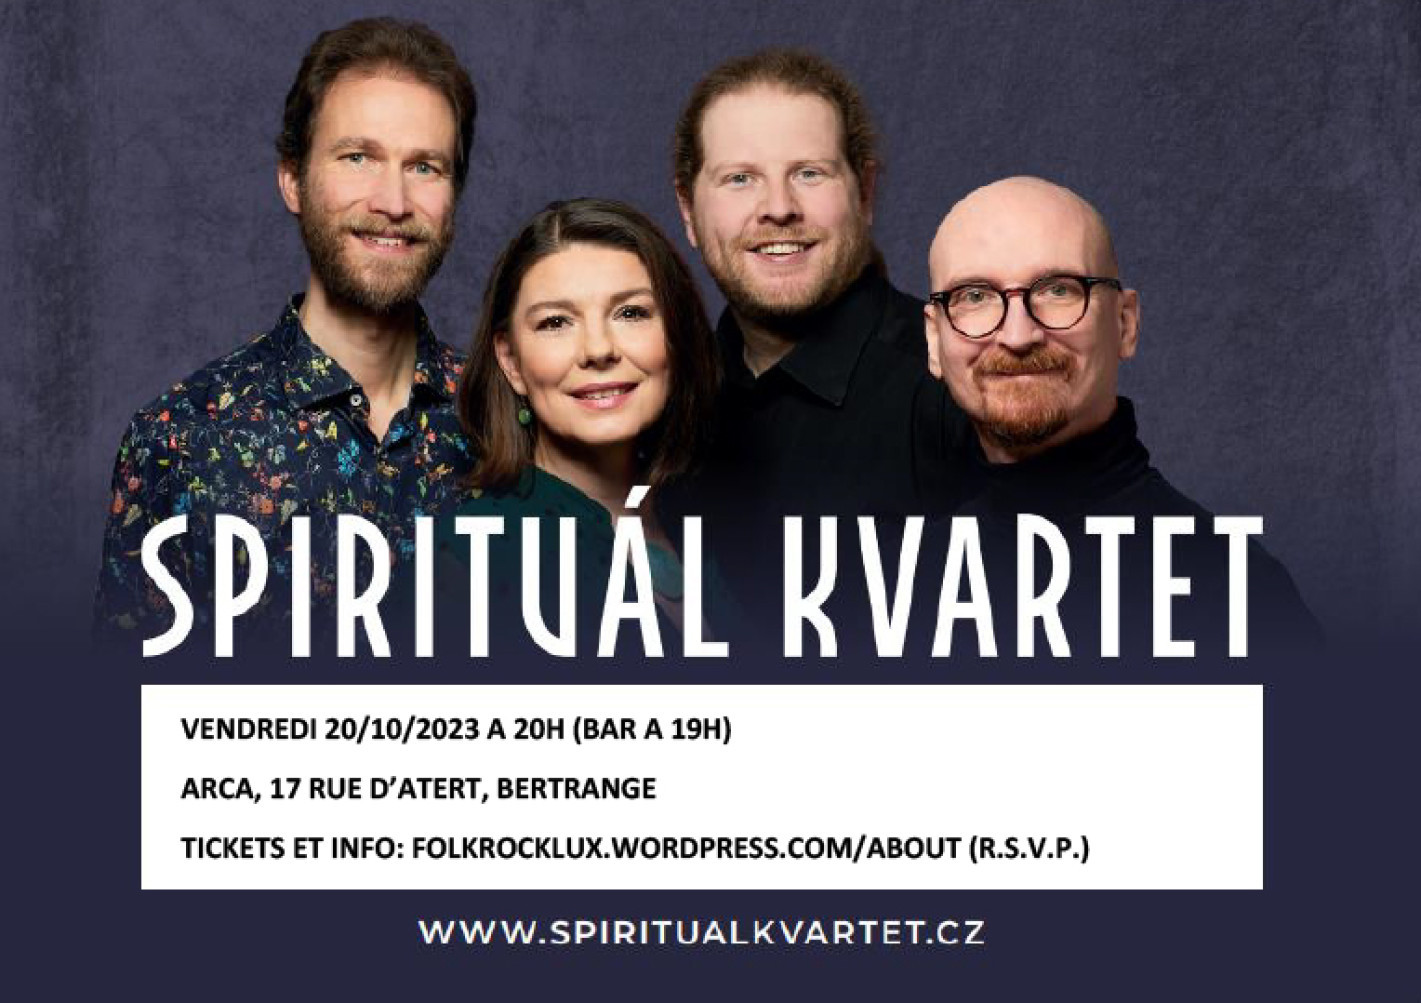 Spiritual Kvartet